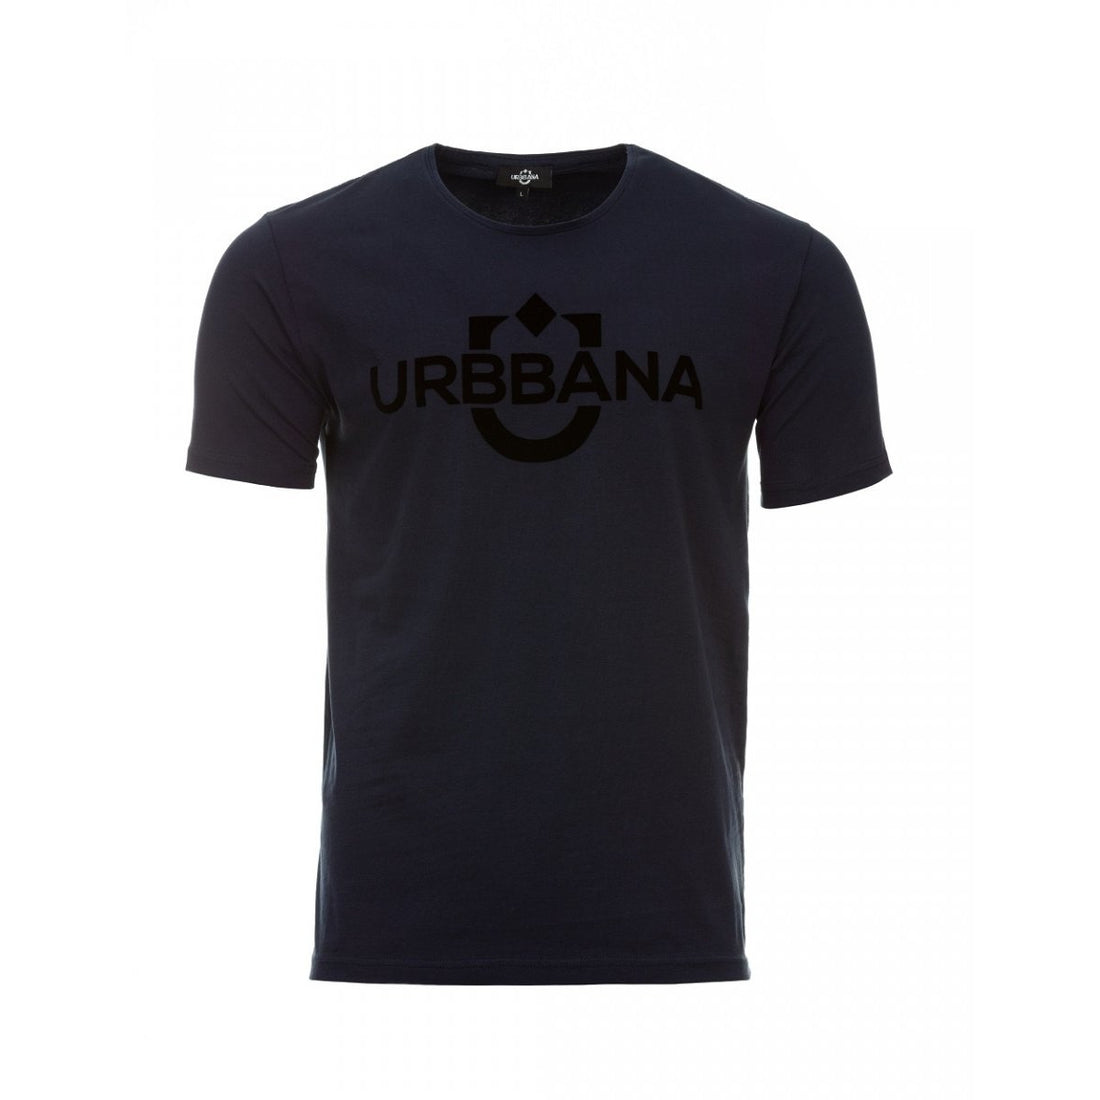 The Round Neck T-Shirt - Navy - t-shirt by Urbbana